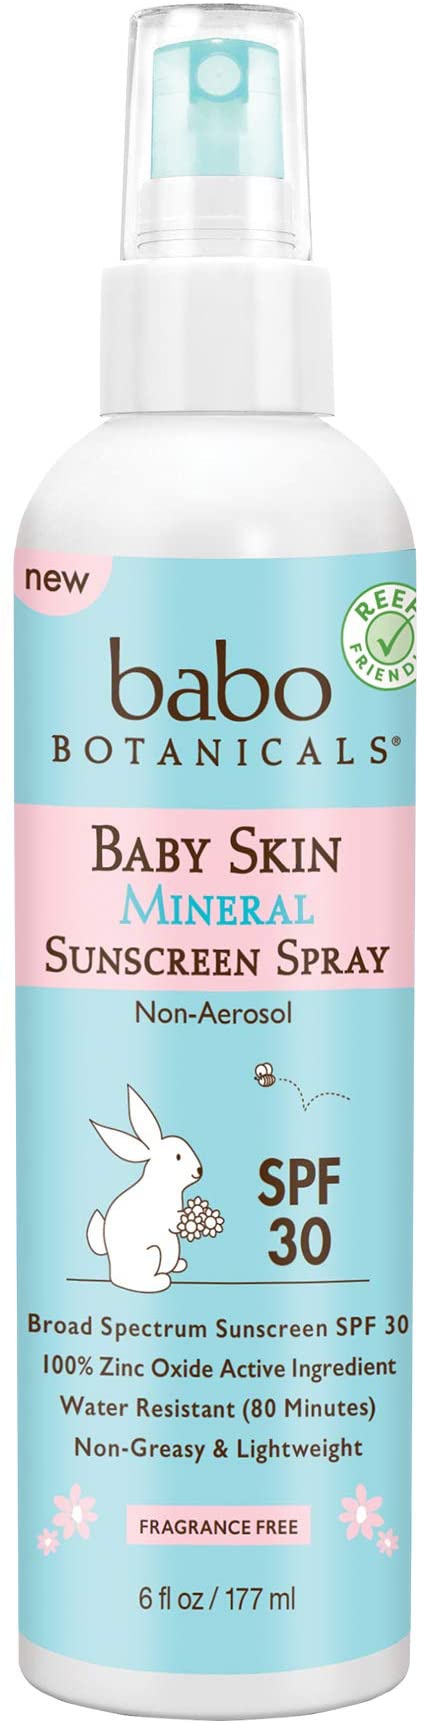 Babo Botanicals Baby Skin Mineral Sunscreen Pump Spray, Spf 30